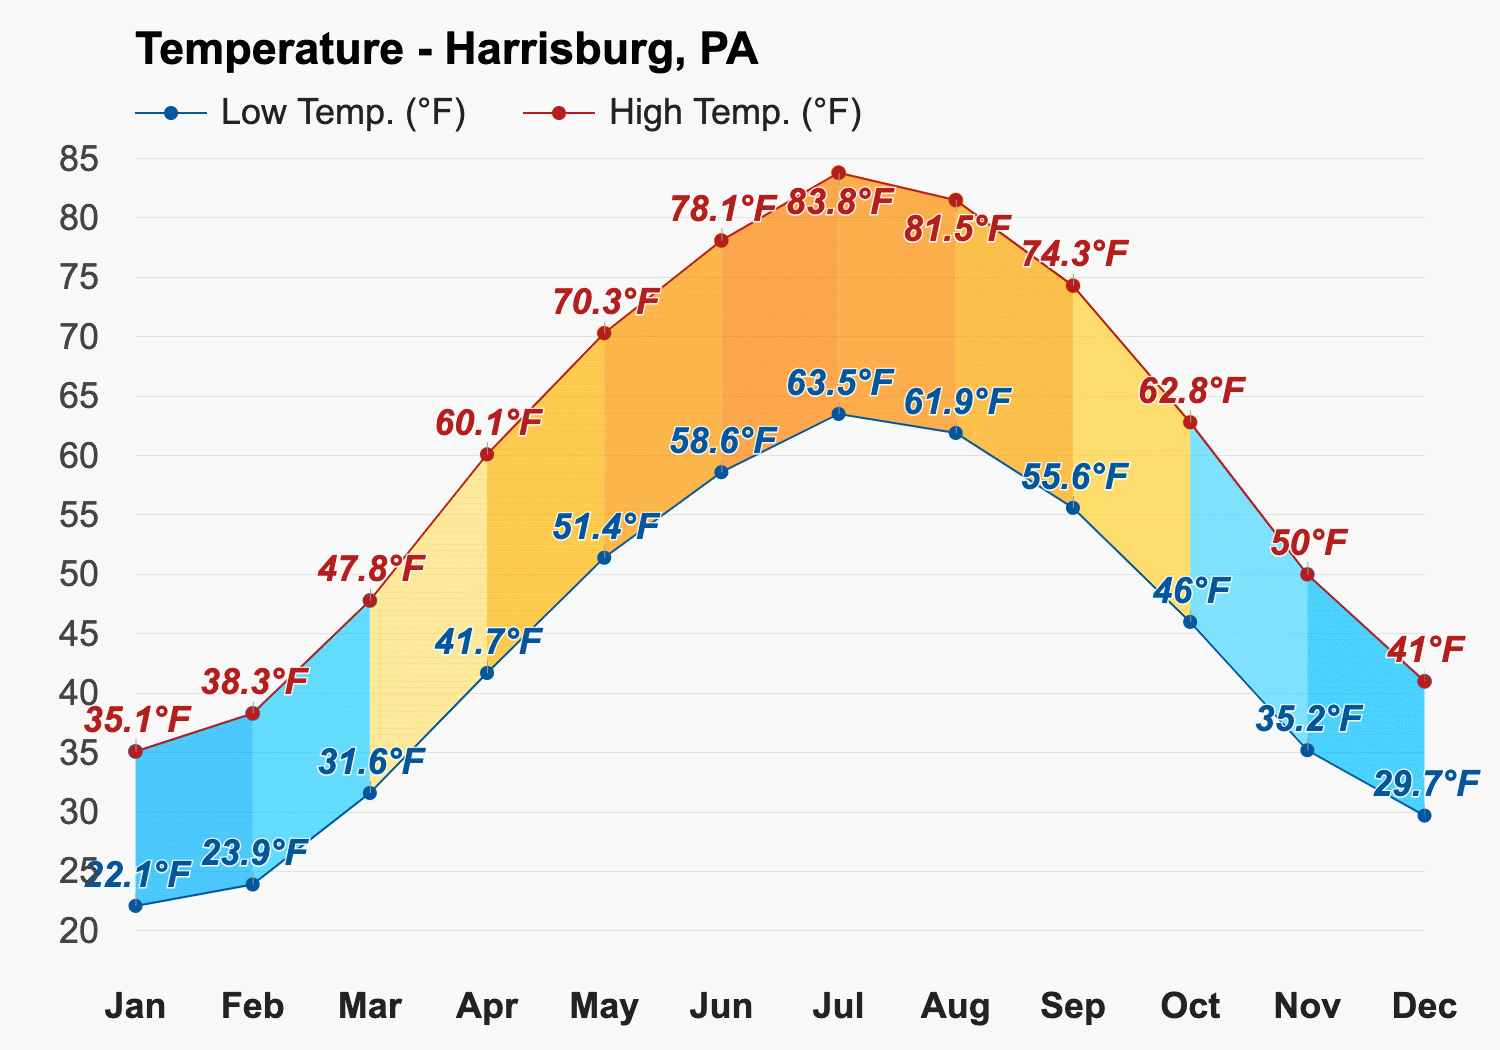 Fig. g. â .accumulated temperatur e in detxees - F.-for-Harrisburg